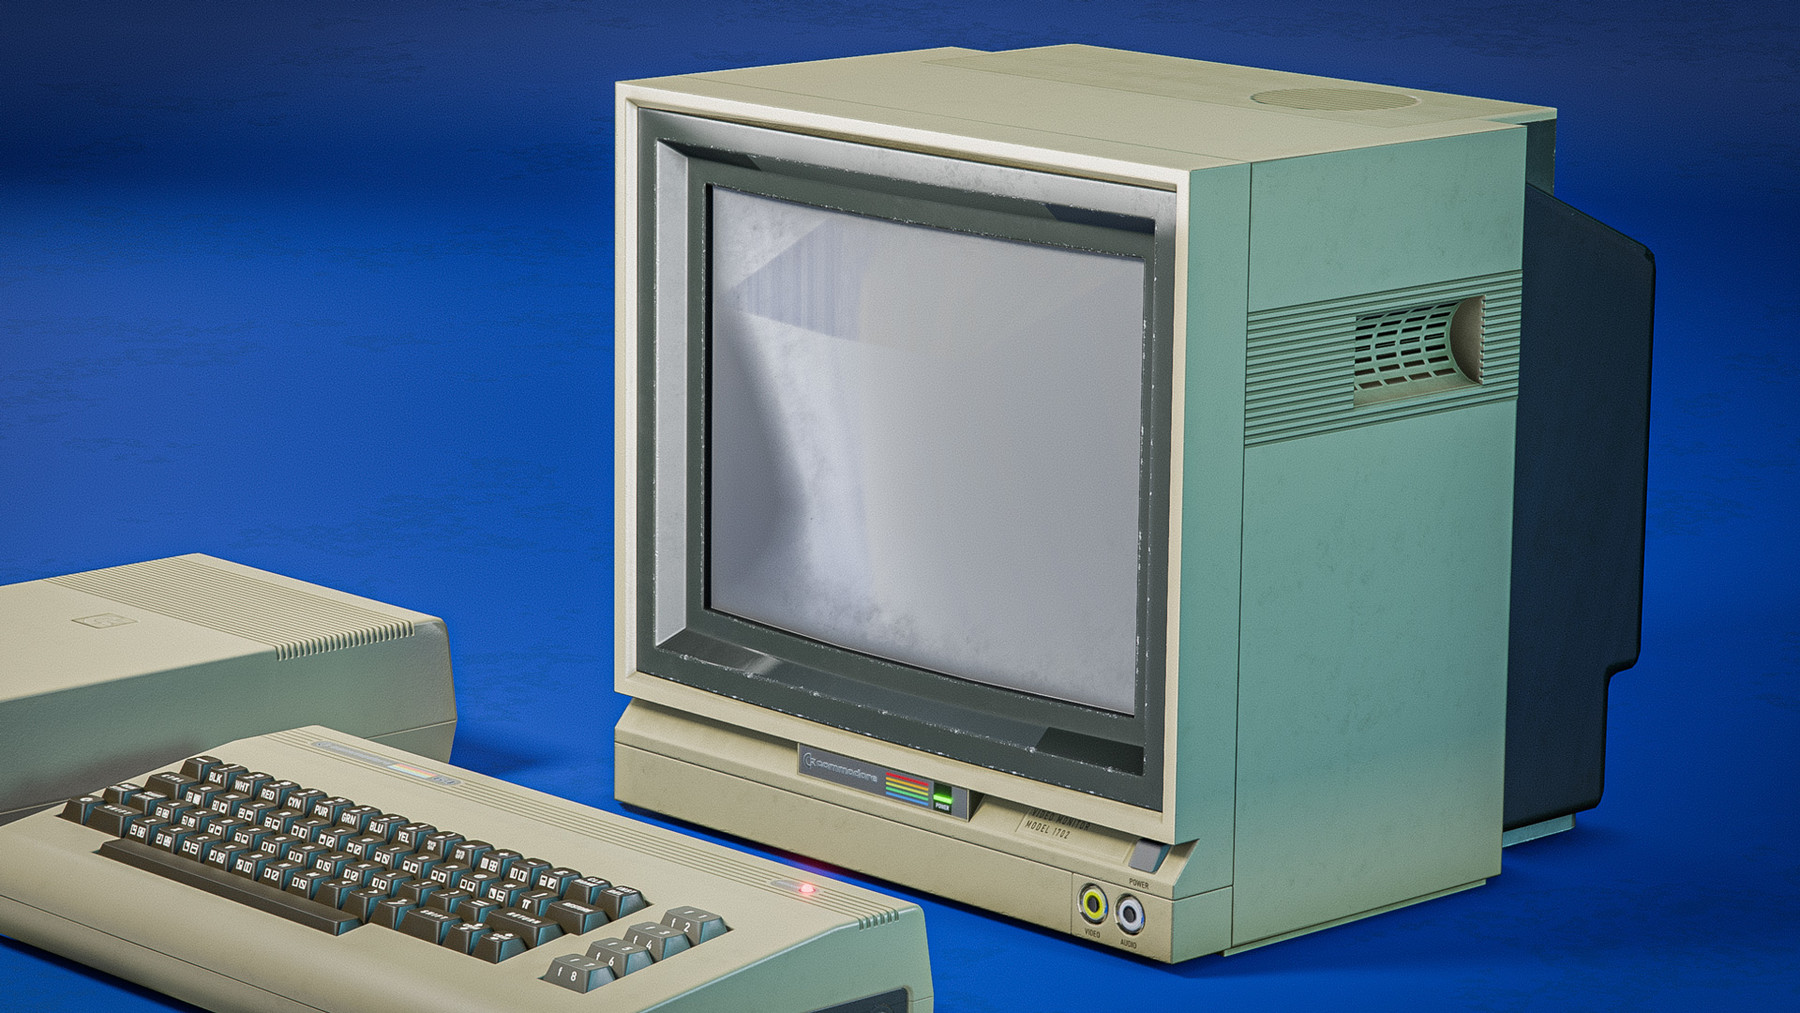 Commodore 64 Bundle